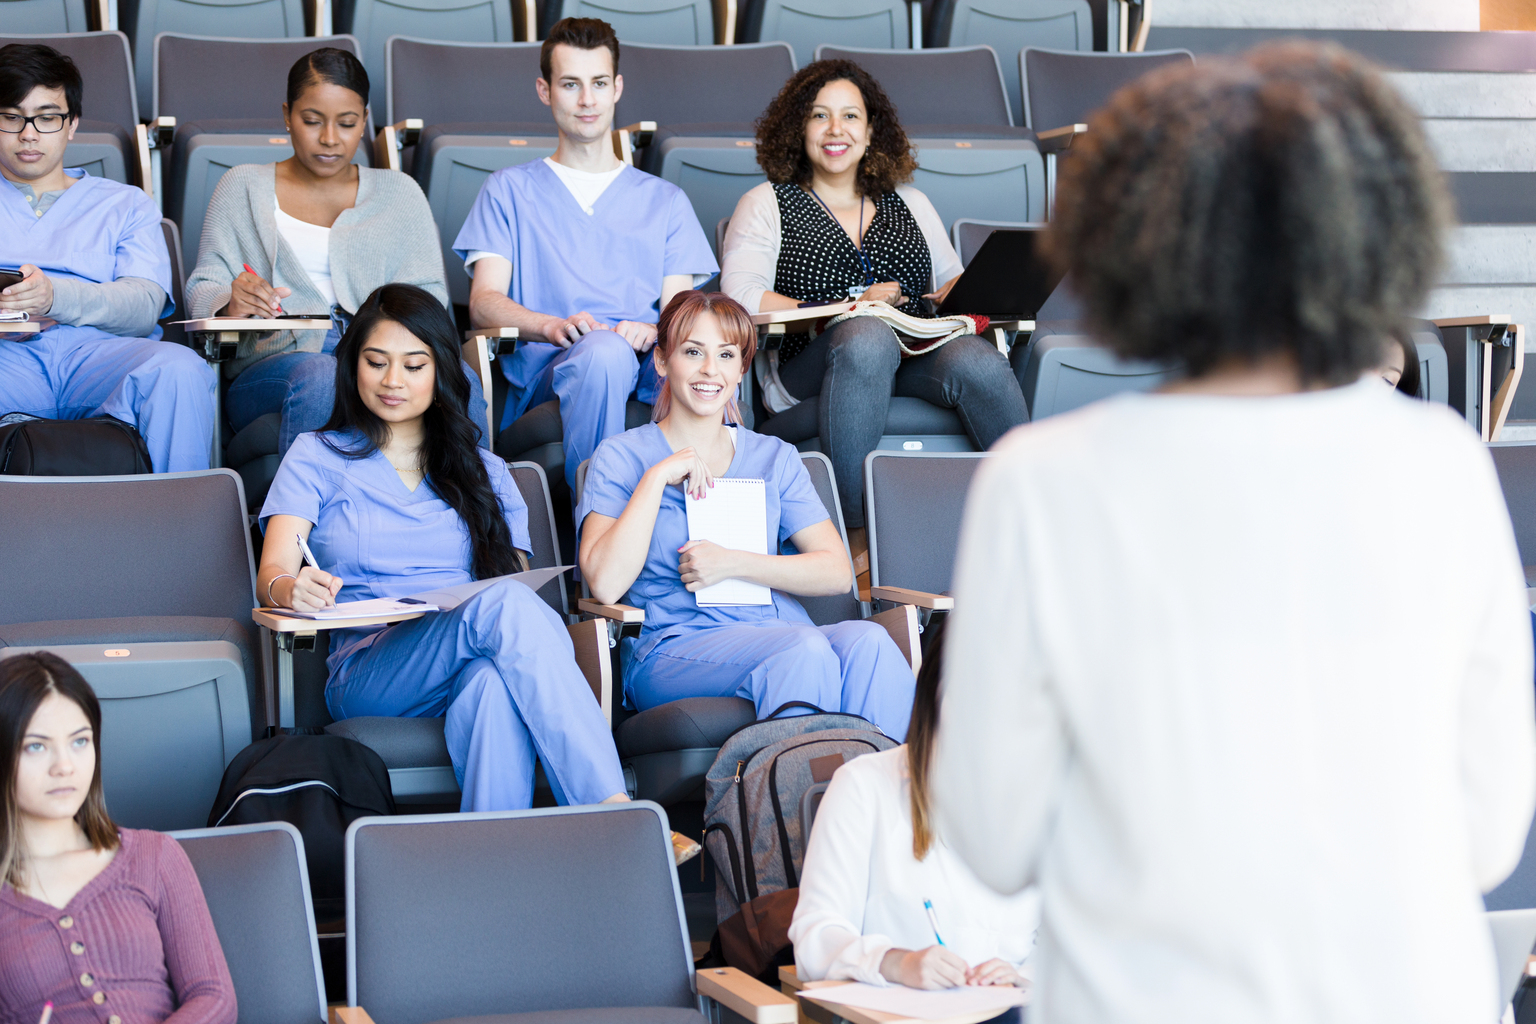 Female professor instructs medical students.